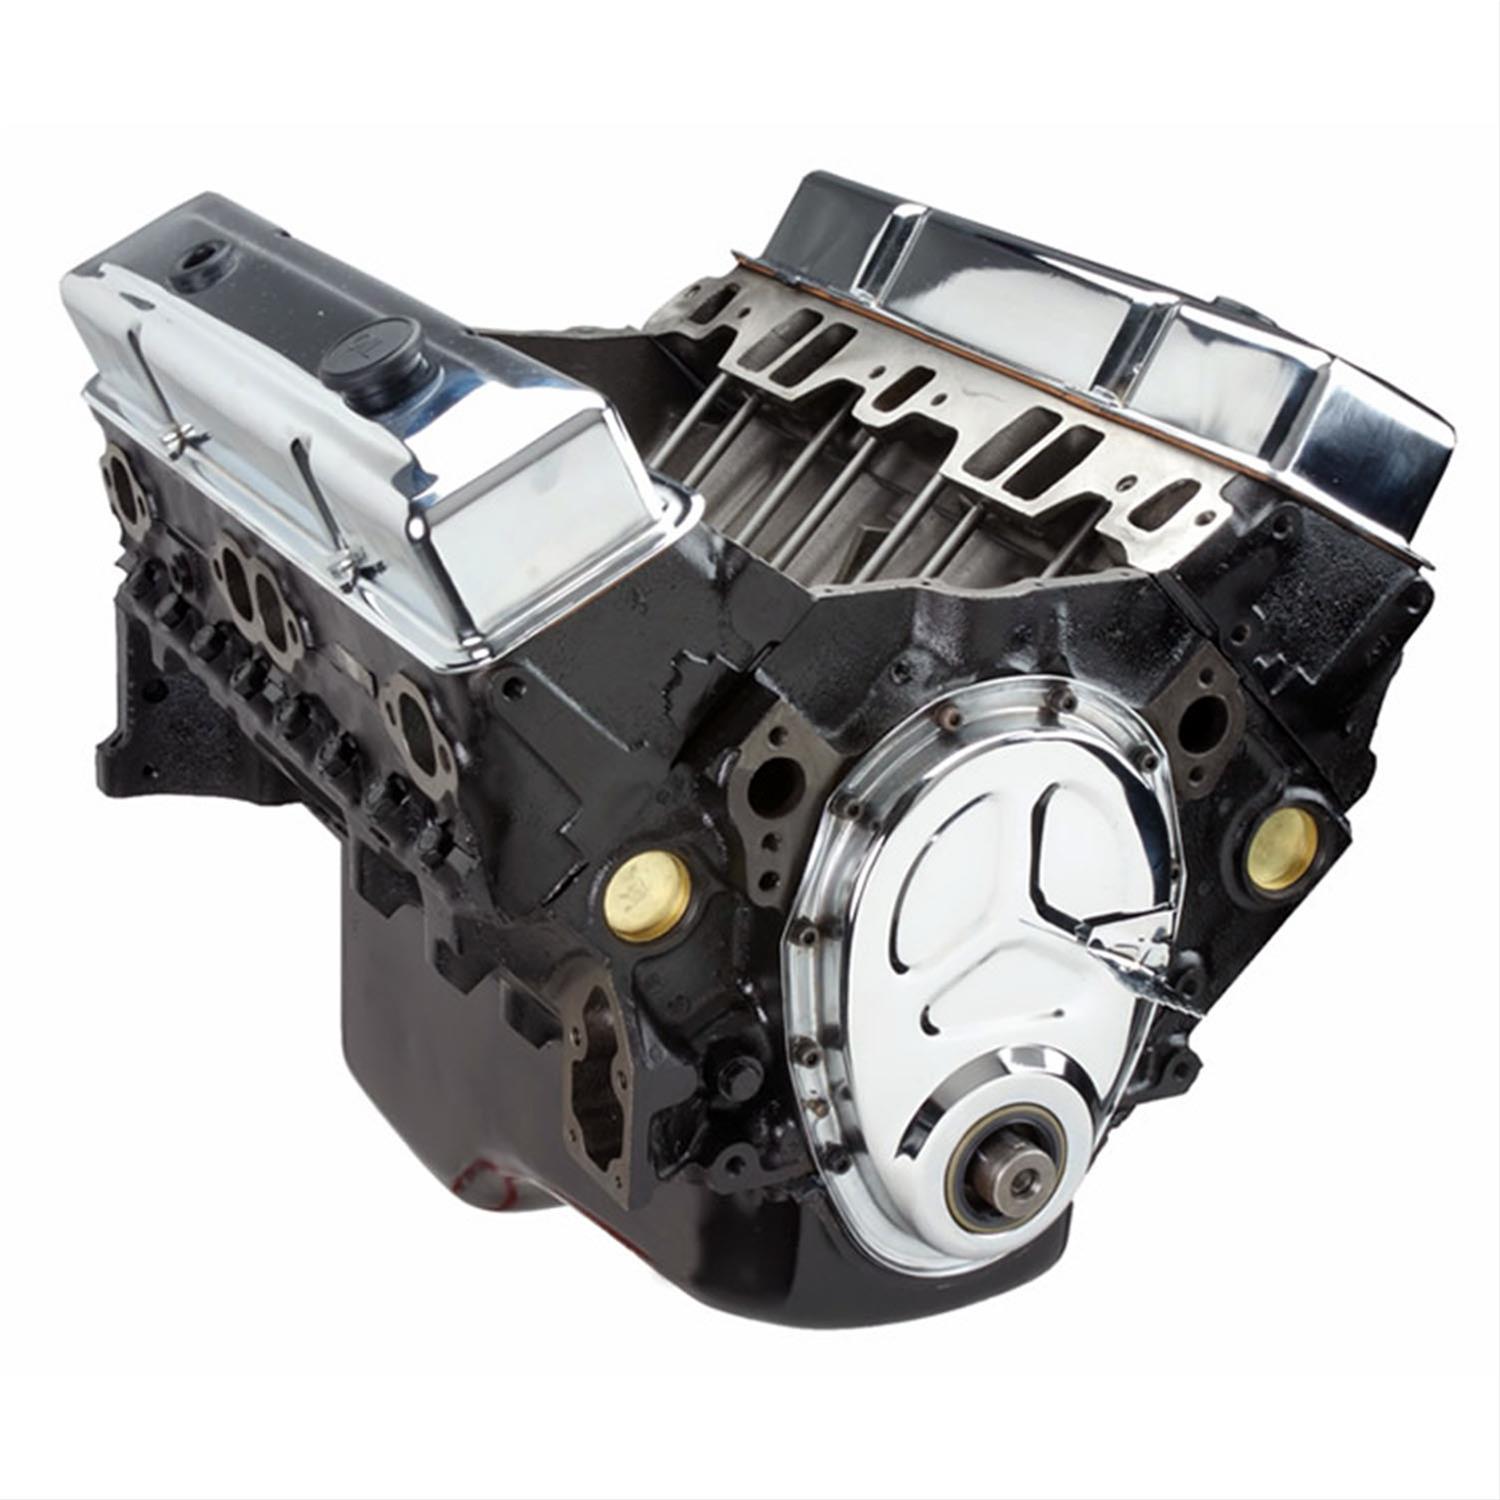 Chevrolet C Atk High Performance Engines Hp P Atk High